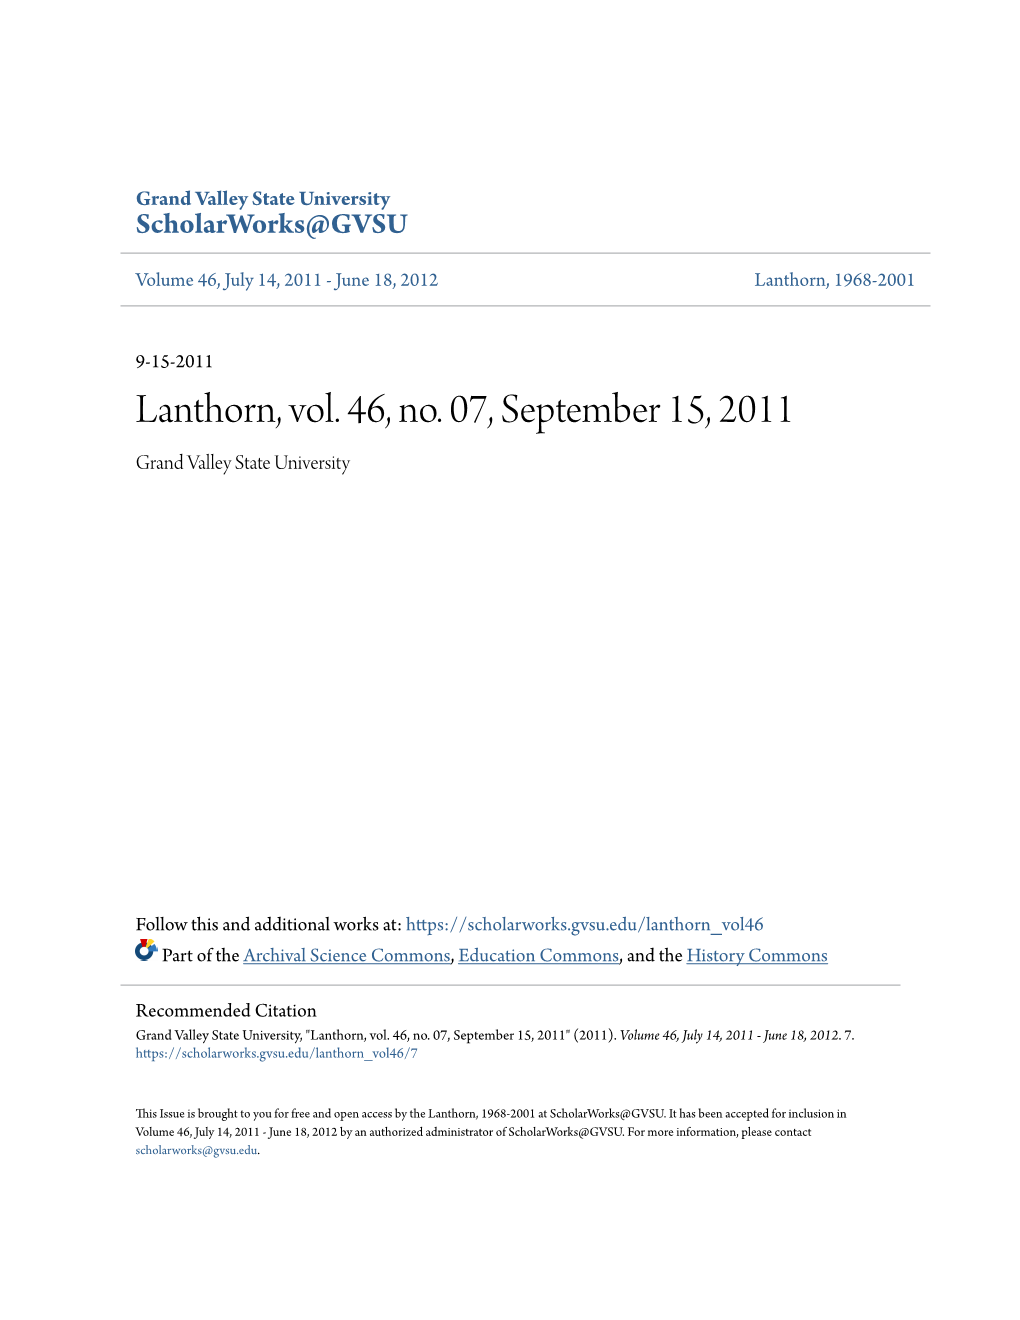 Lanthorn, Vol. 46, No. 07, September 15, 2011 Grand Valley State University